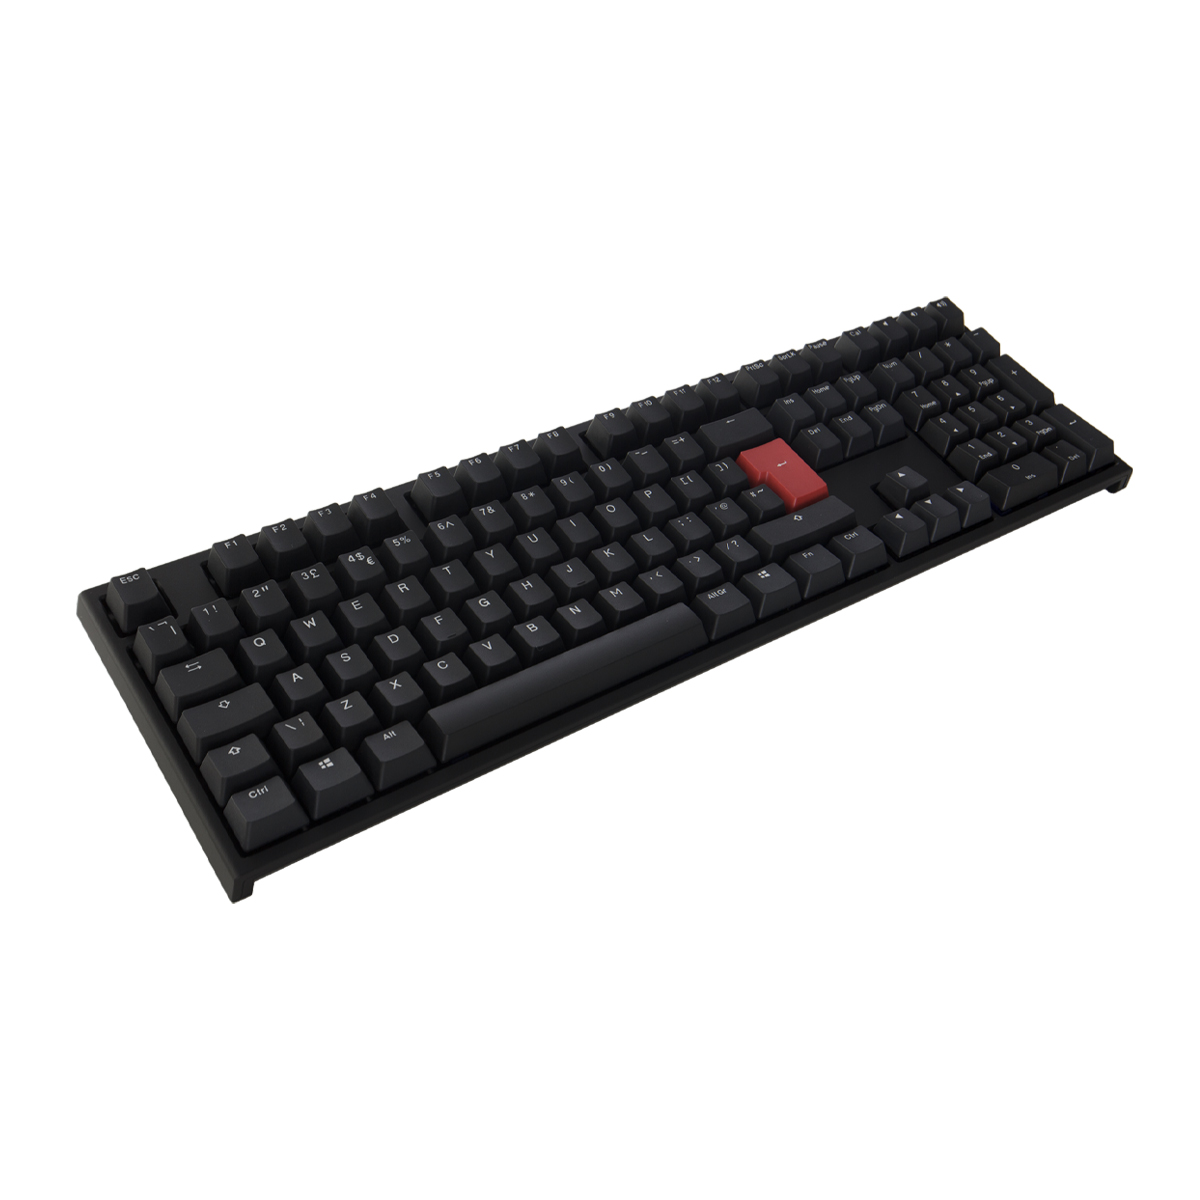 Ducky - Ducky One 2 Phantom Black Mechanical Gaming Keyboard Cherry MX Brown Switch - UK Layout